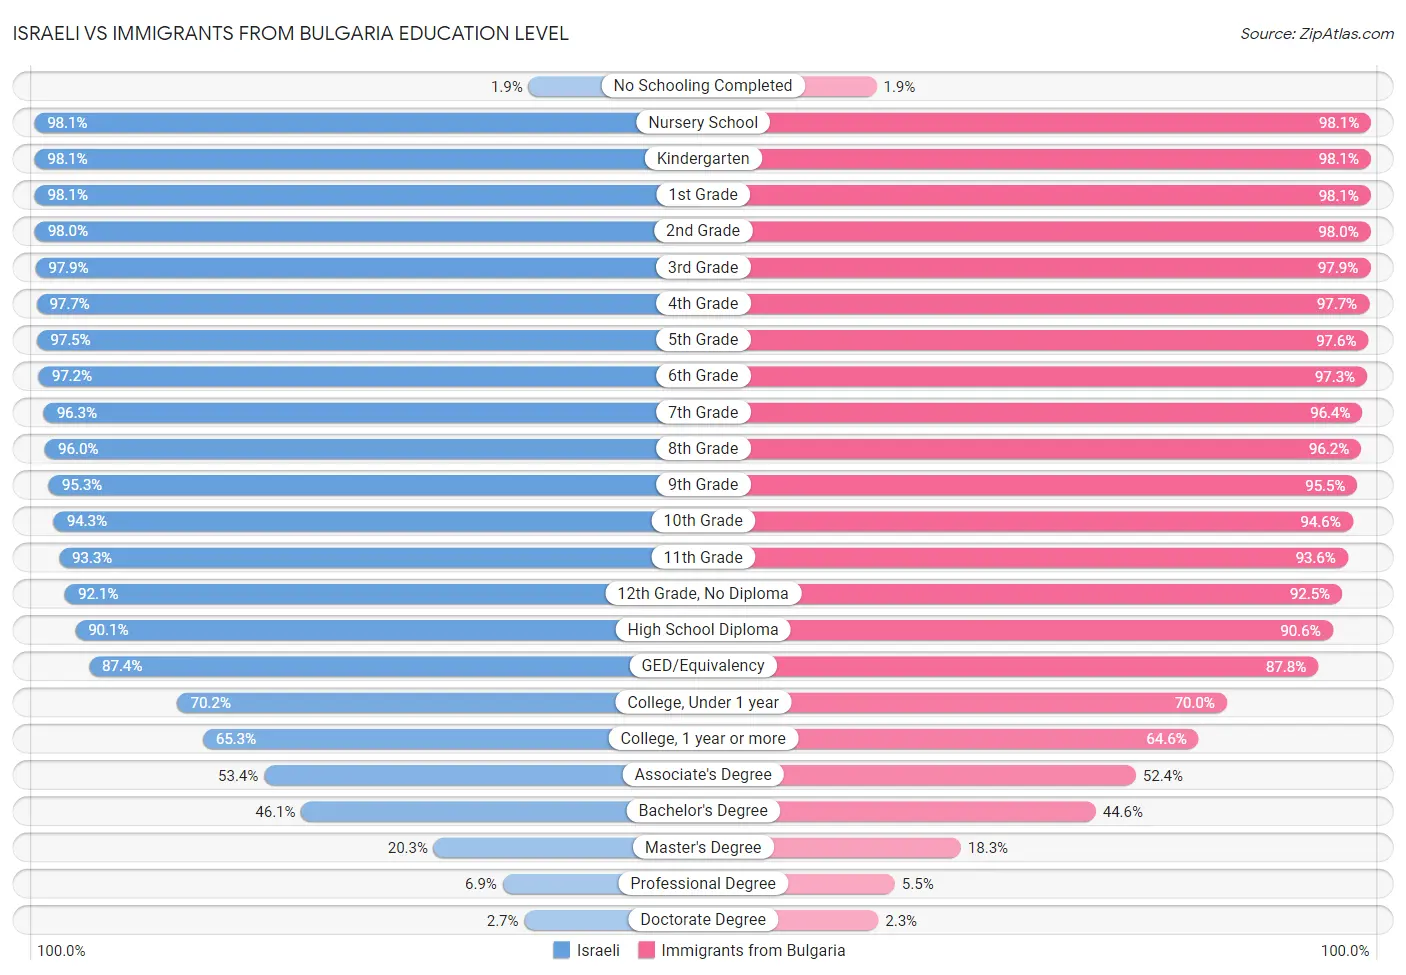 Israeli vs Immigrants from Bulgaria Education Level